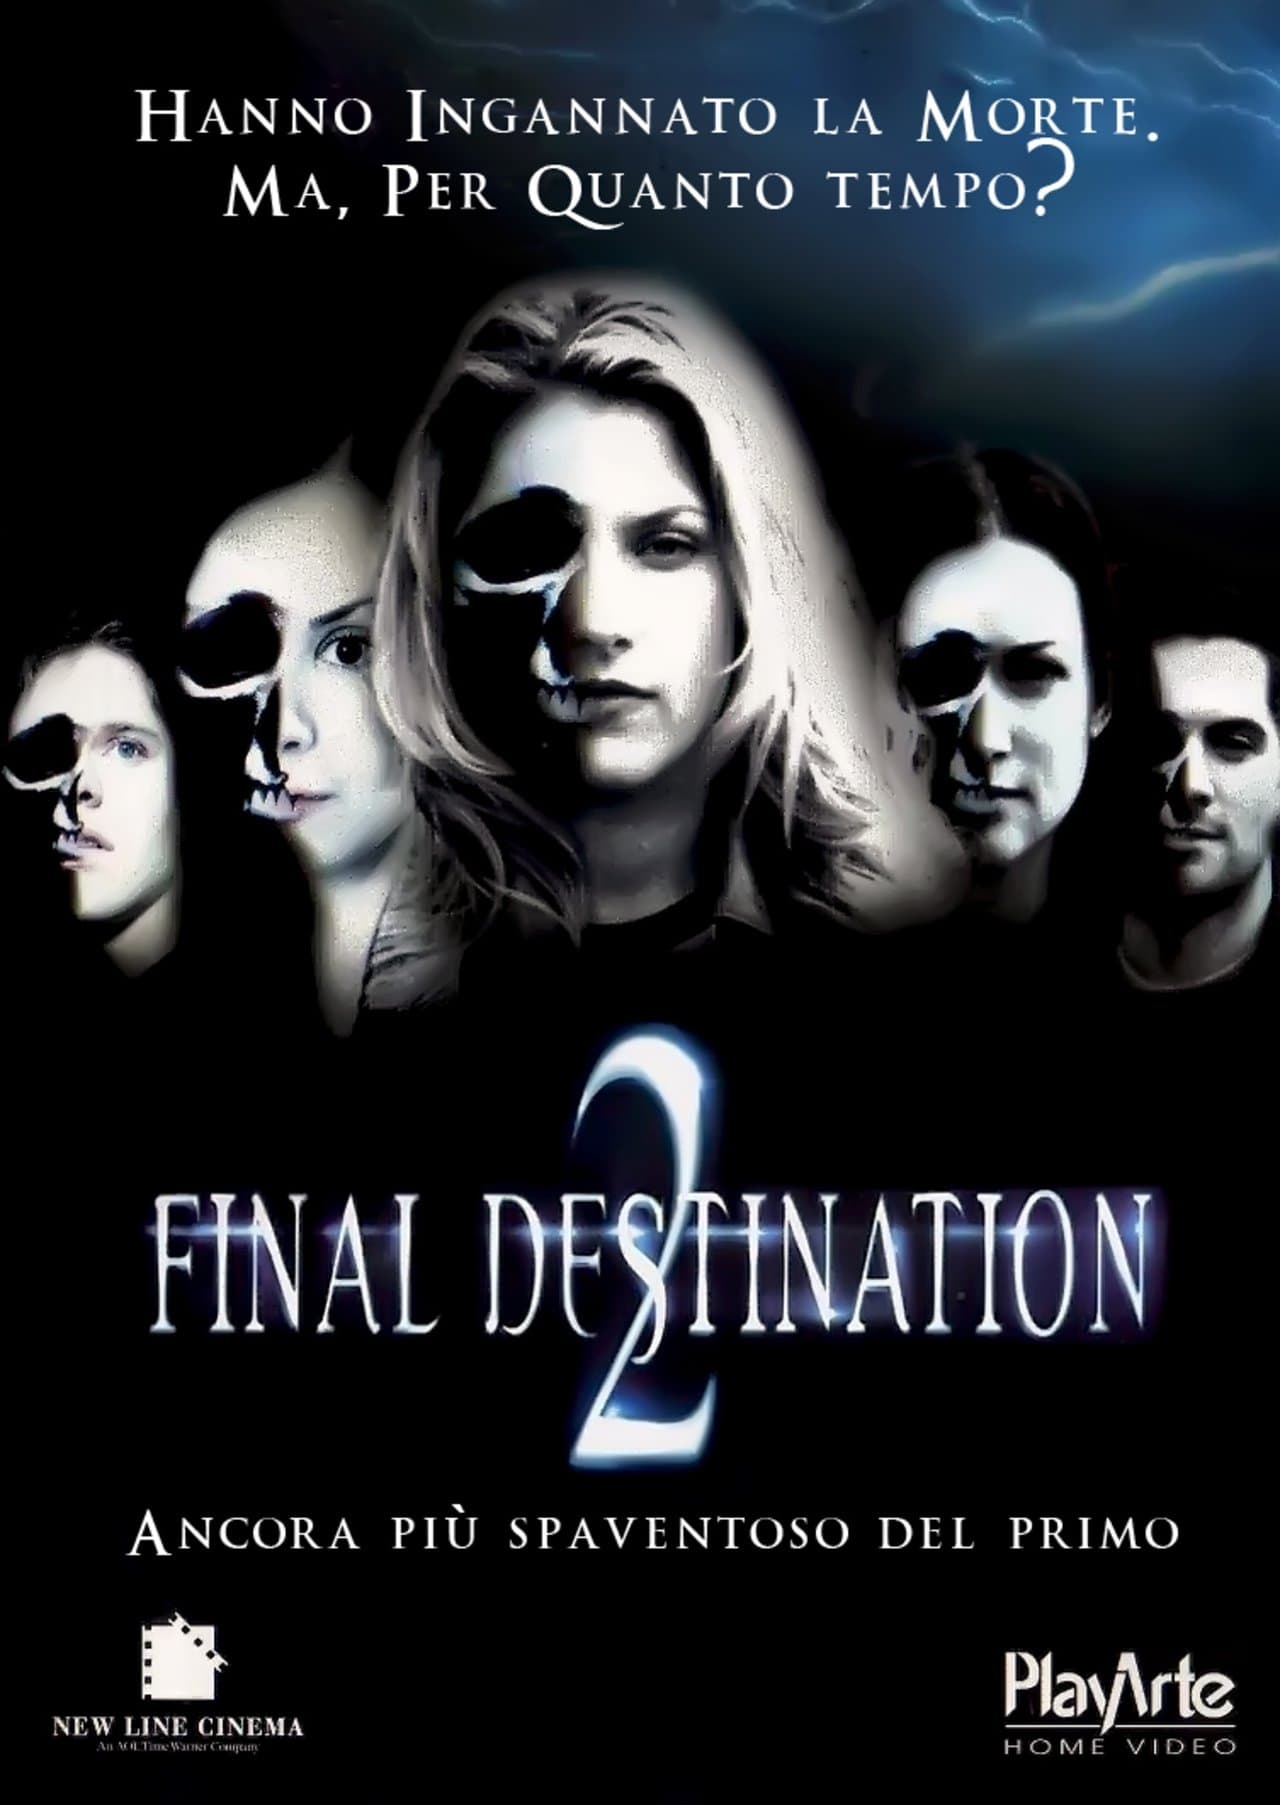 where can i watch final destination 1